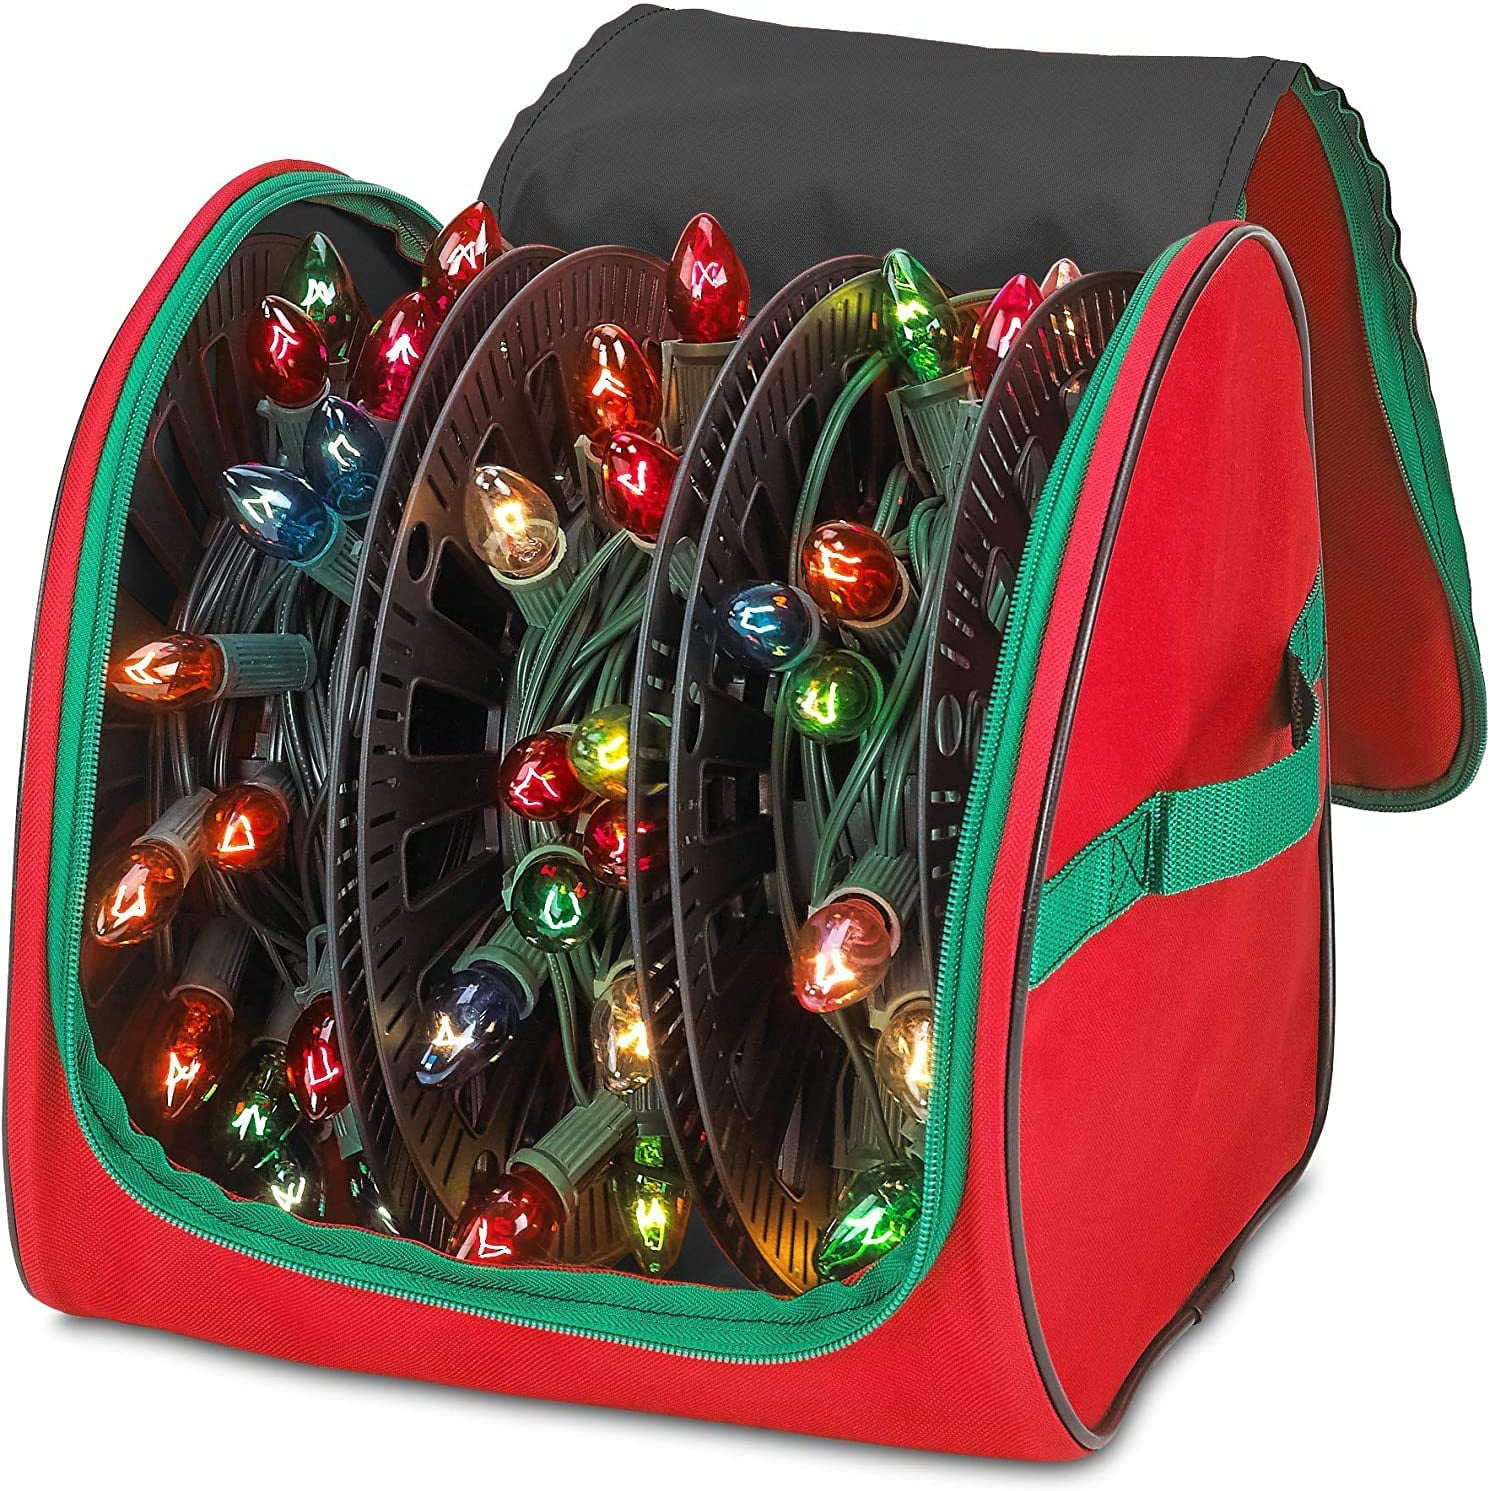 Christmas Light Storage Reels - Decoration Organizer Bag with